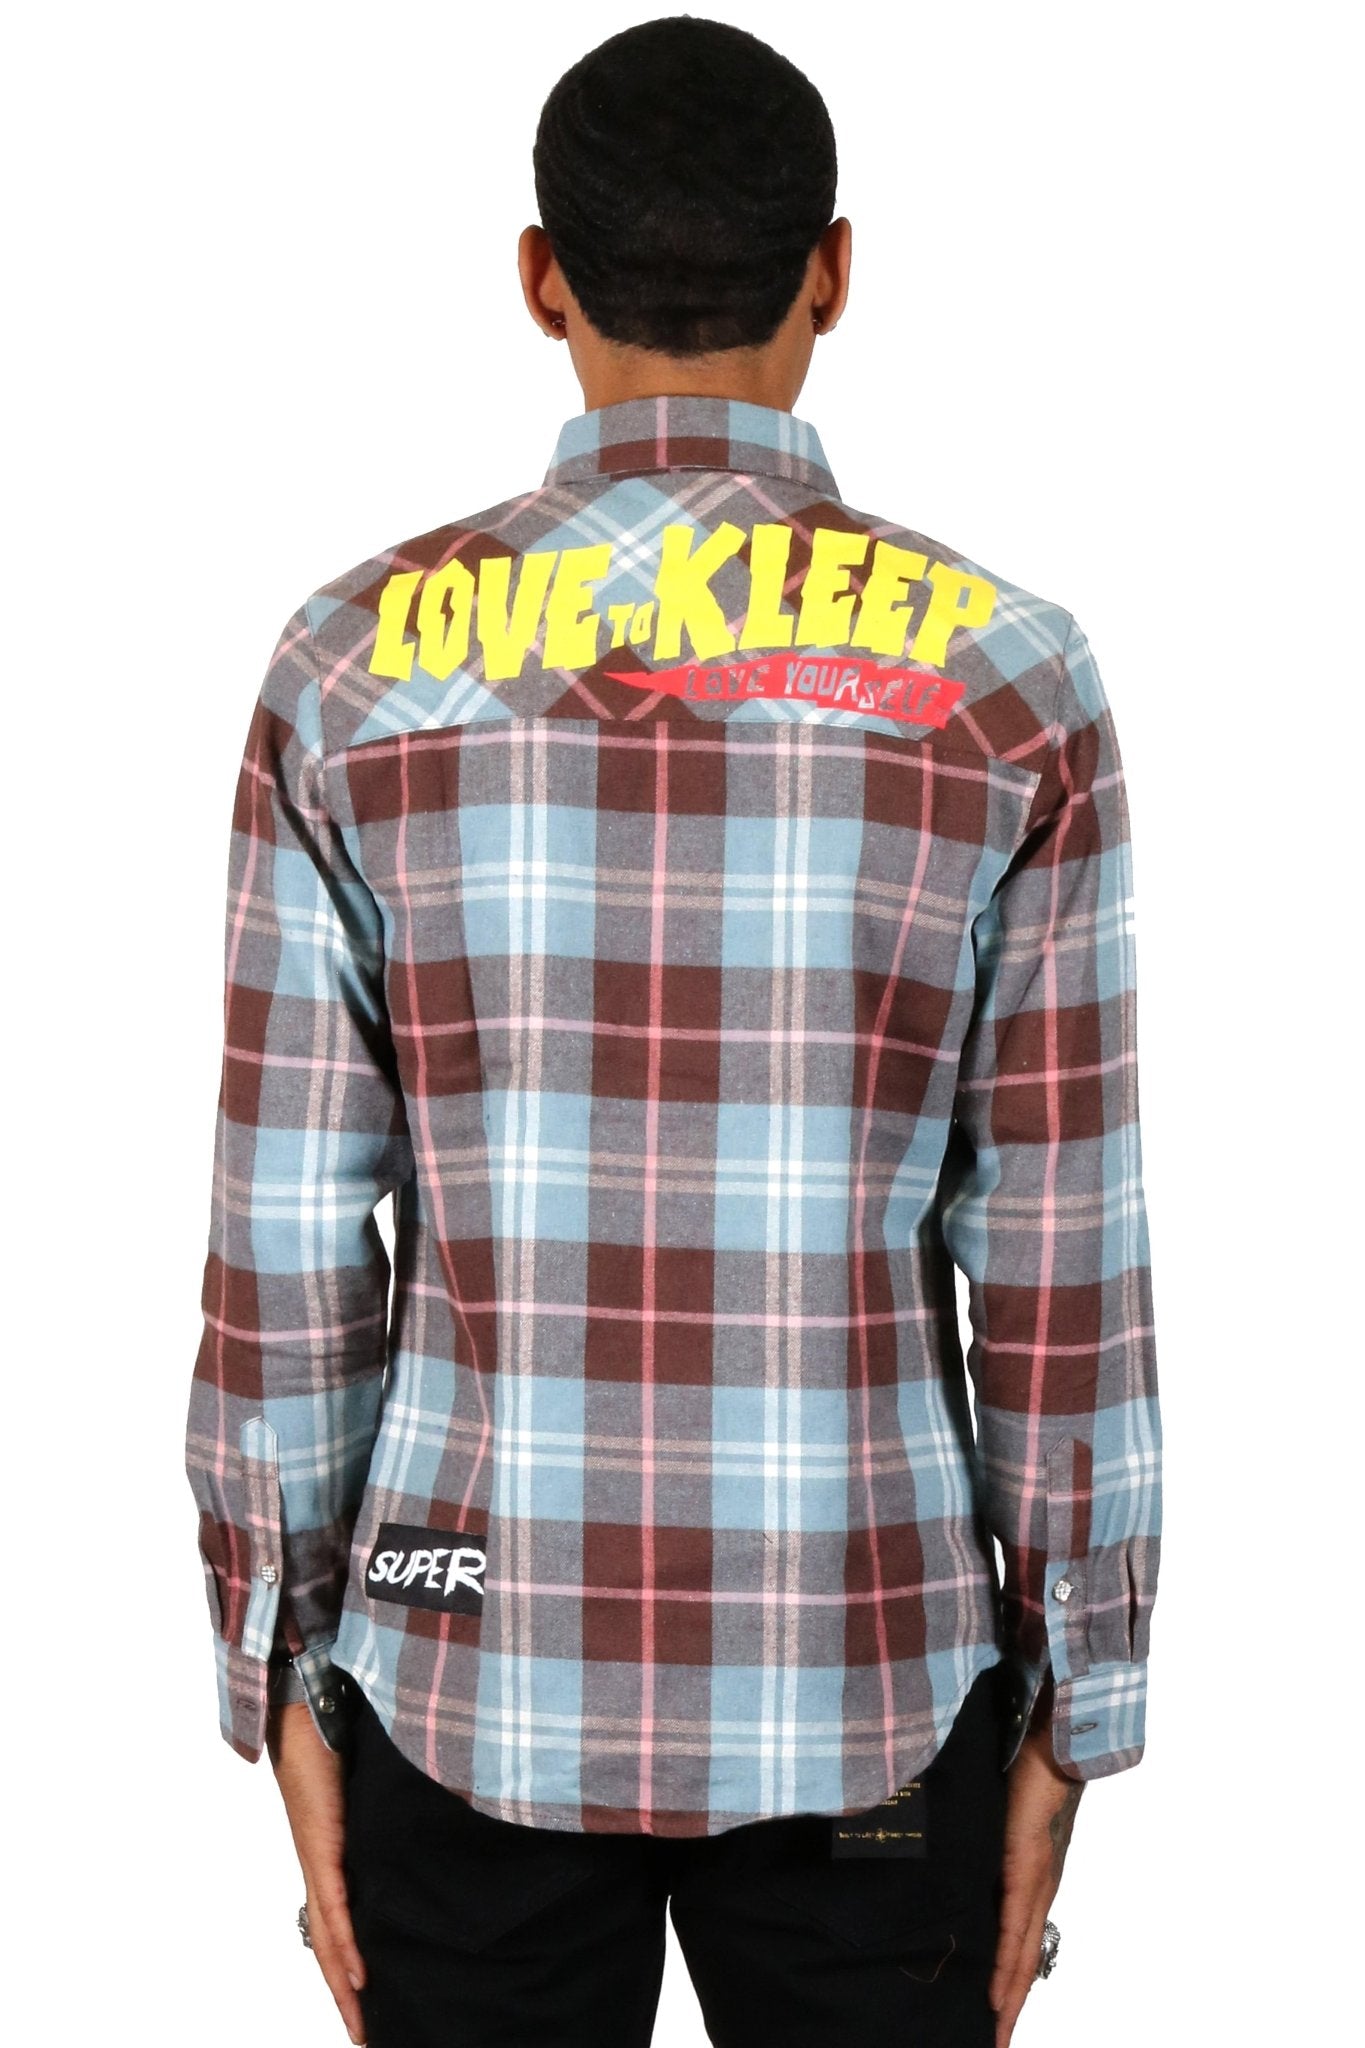 BANAN Men's graphic prints and patches blue tone plaid pattern cotton flannel button down shirt - Love to KleepMen's ShirtKLEEPLove to Kleep